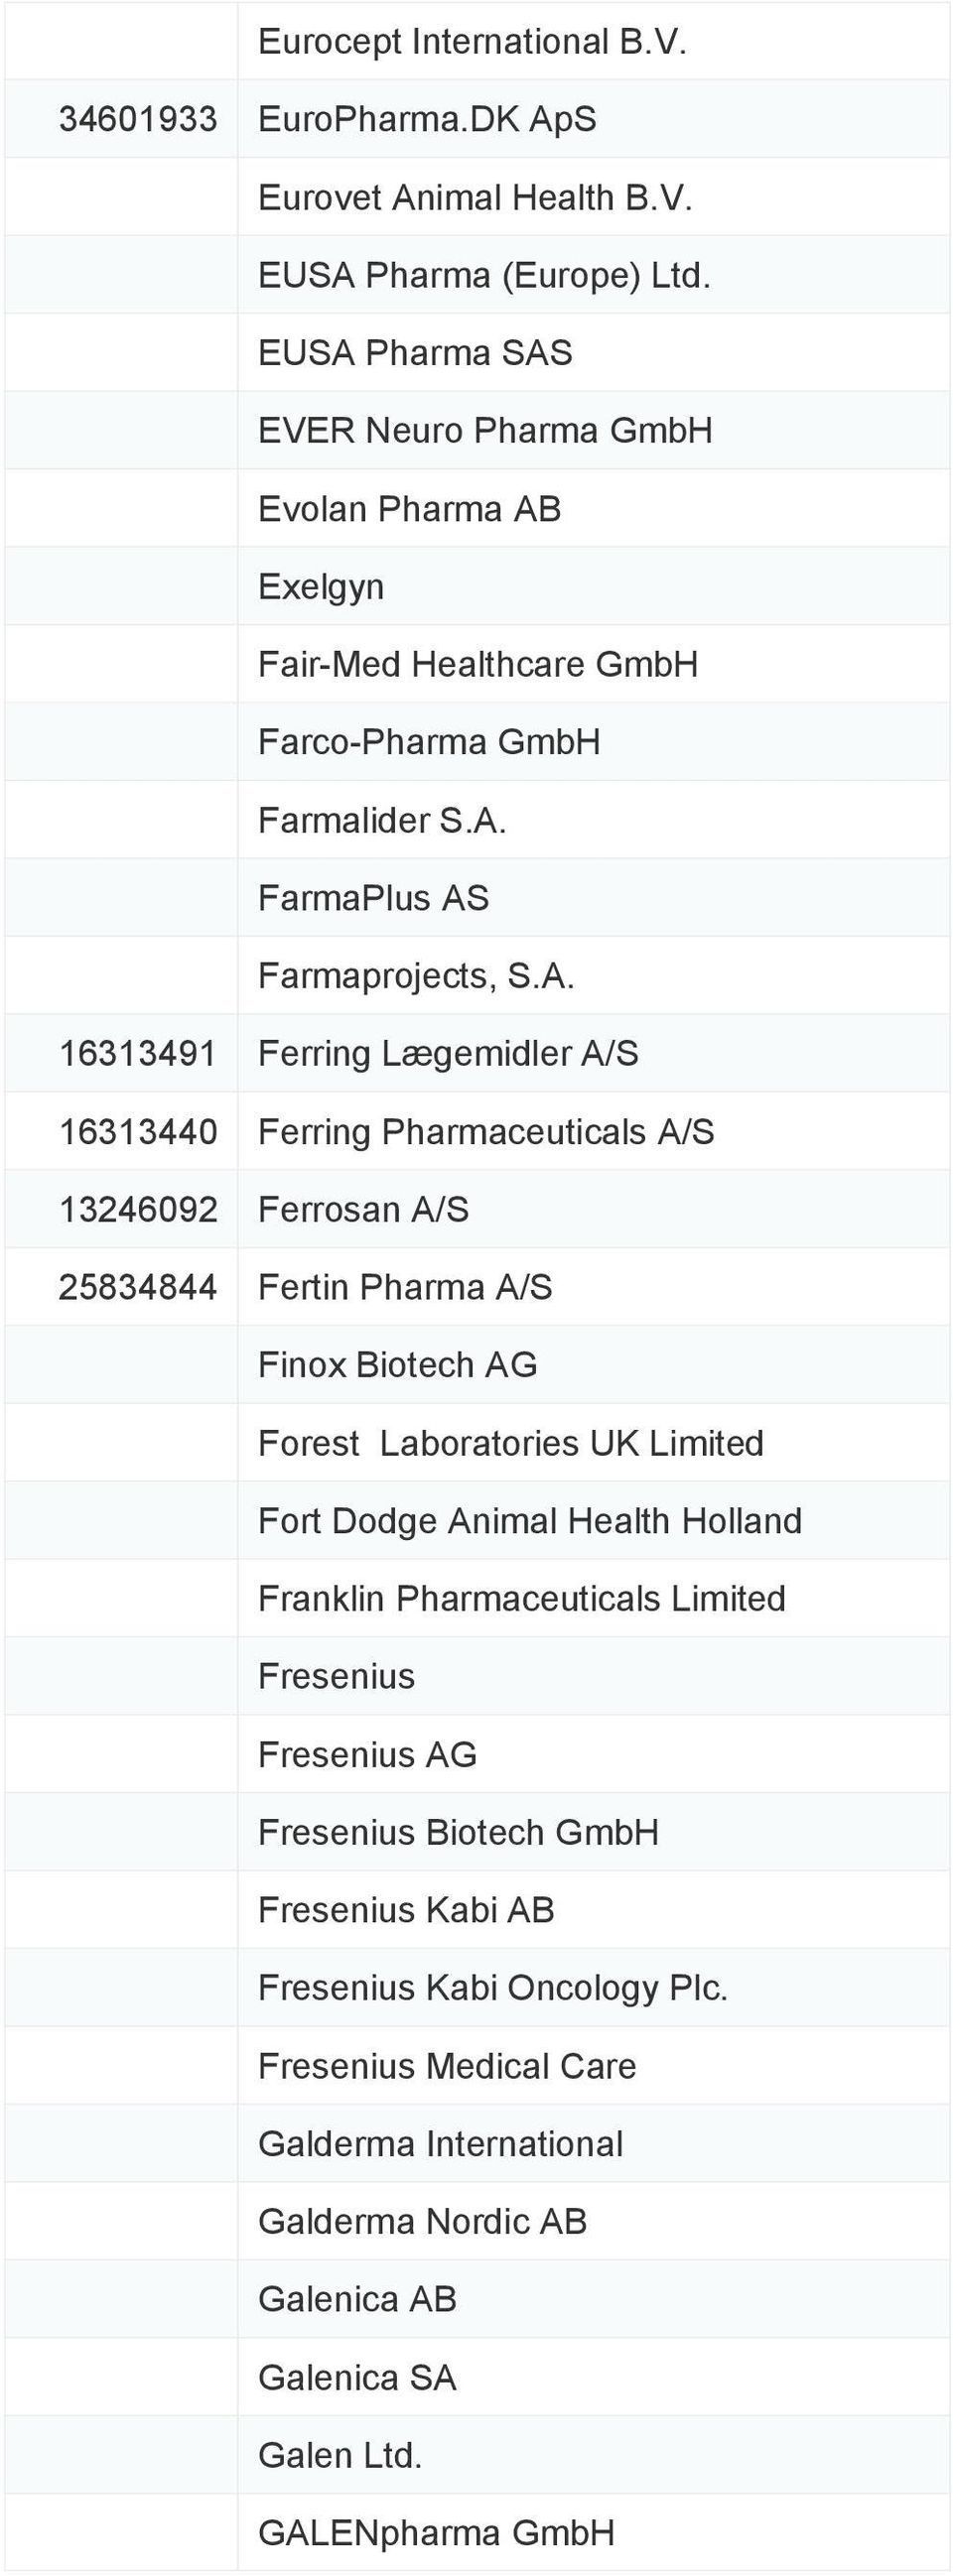 Lægemidler A/S 16313440 Ferring Pharmaceuticals A/S 13246092 Ferrosan A/S 25834844 Fertin Pharma A/S Finox Biotech AG Forest Laboratories UK Limited Fort Dodge Animal Health